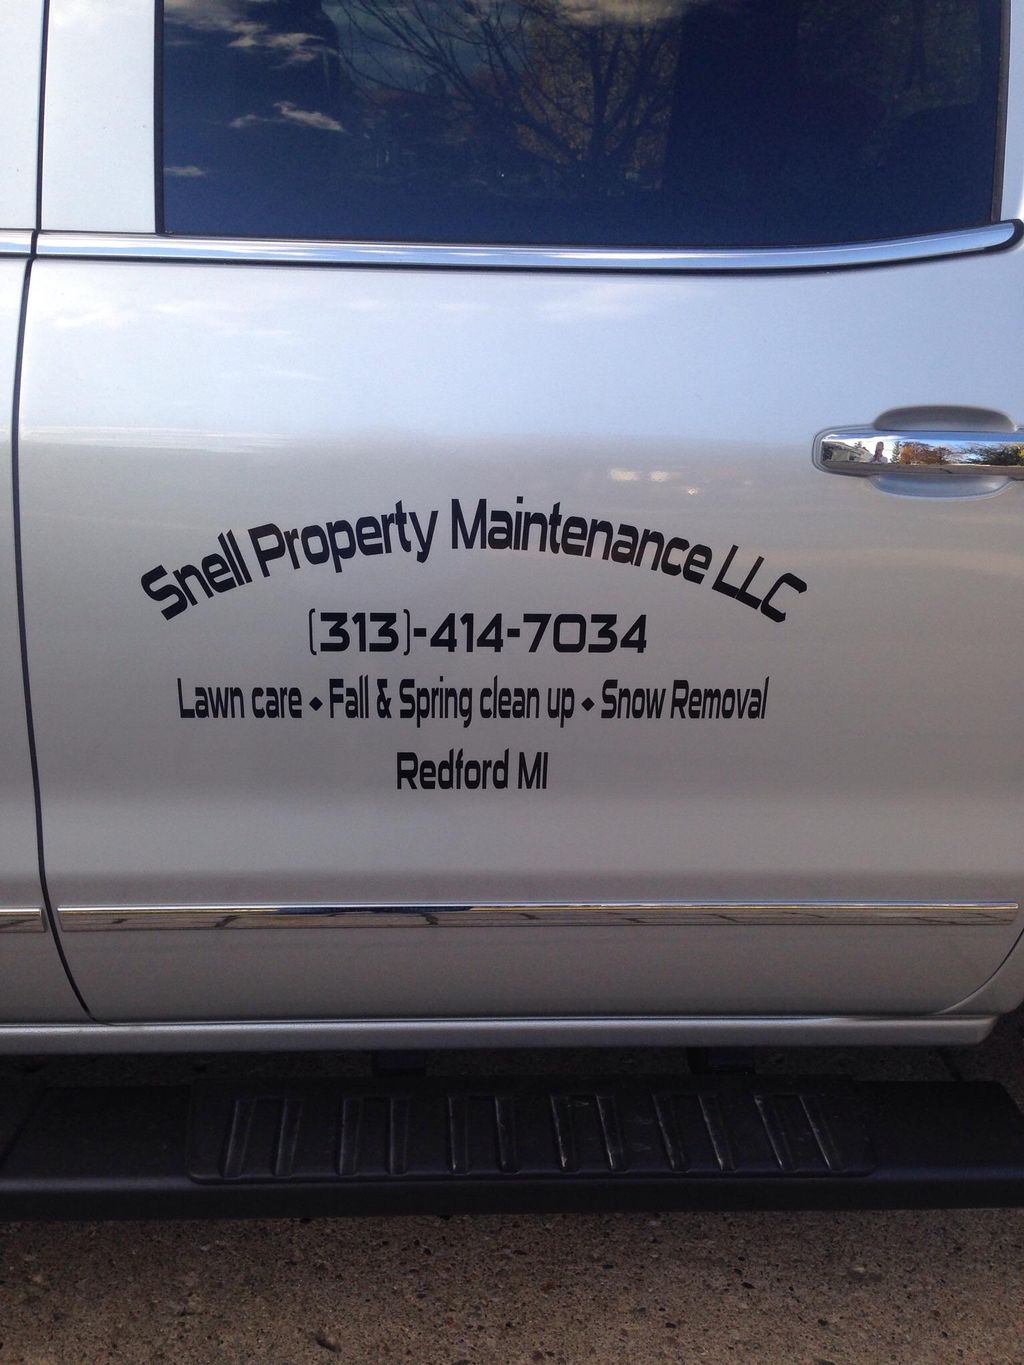 Snell Property Maintenance LLC